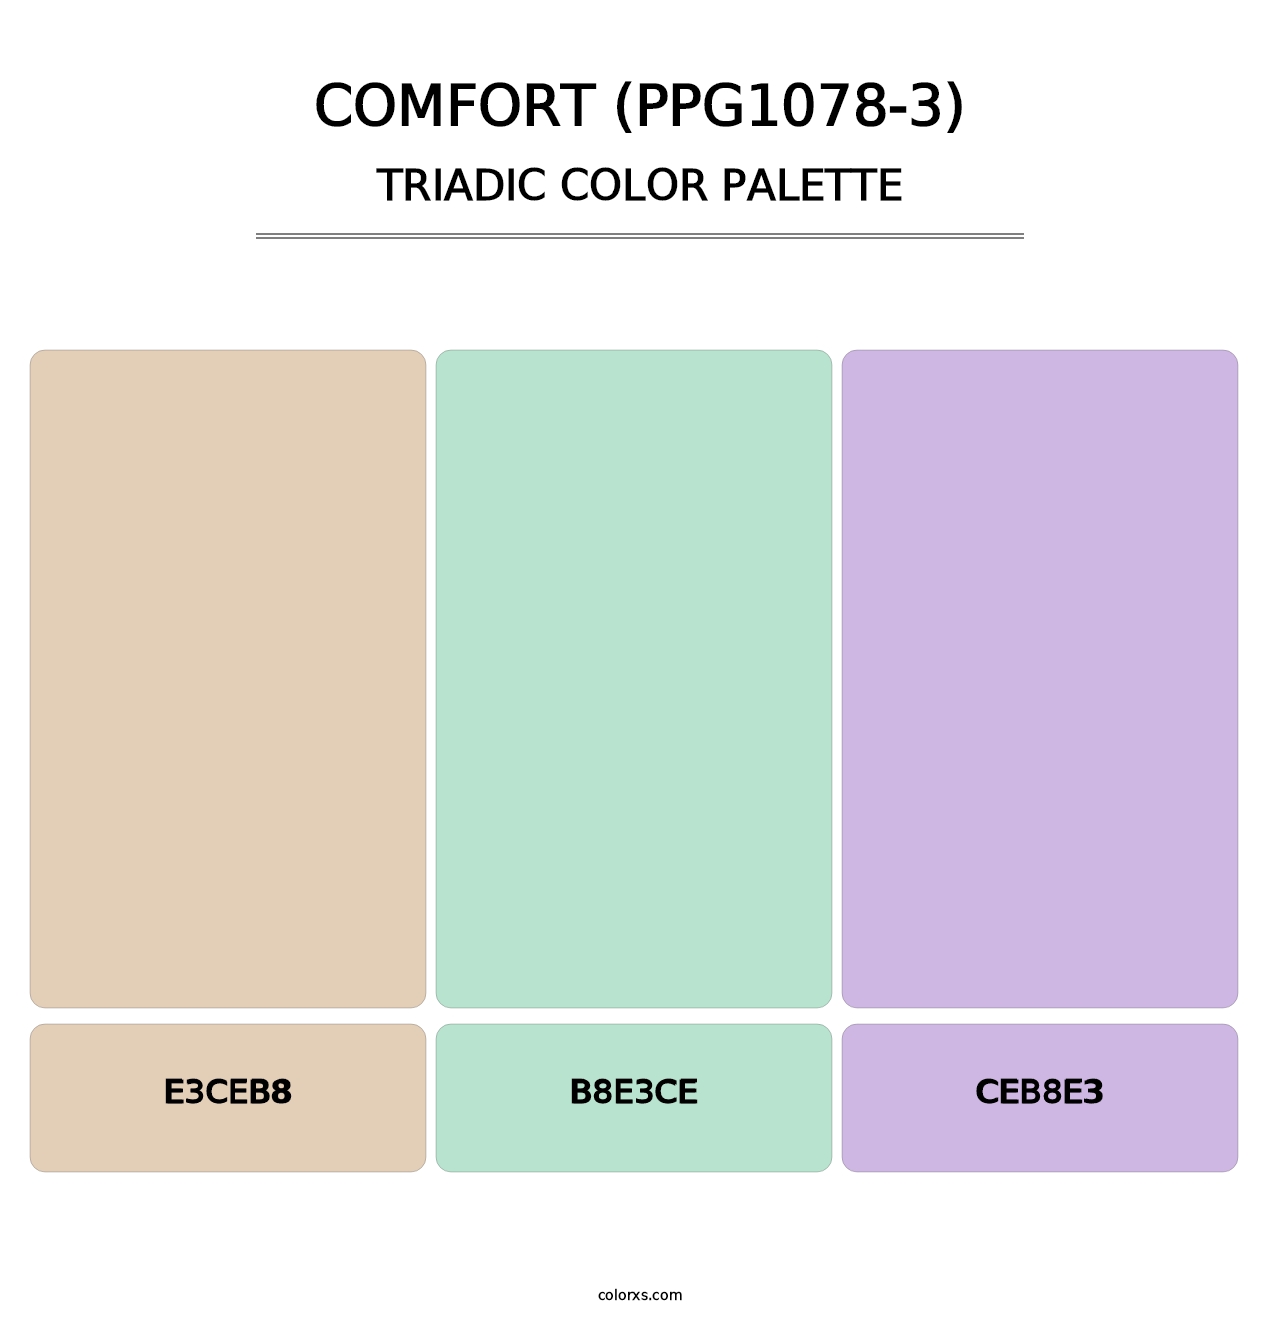 Comfort (PPG1078-3) - Triadic Color Palette